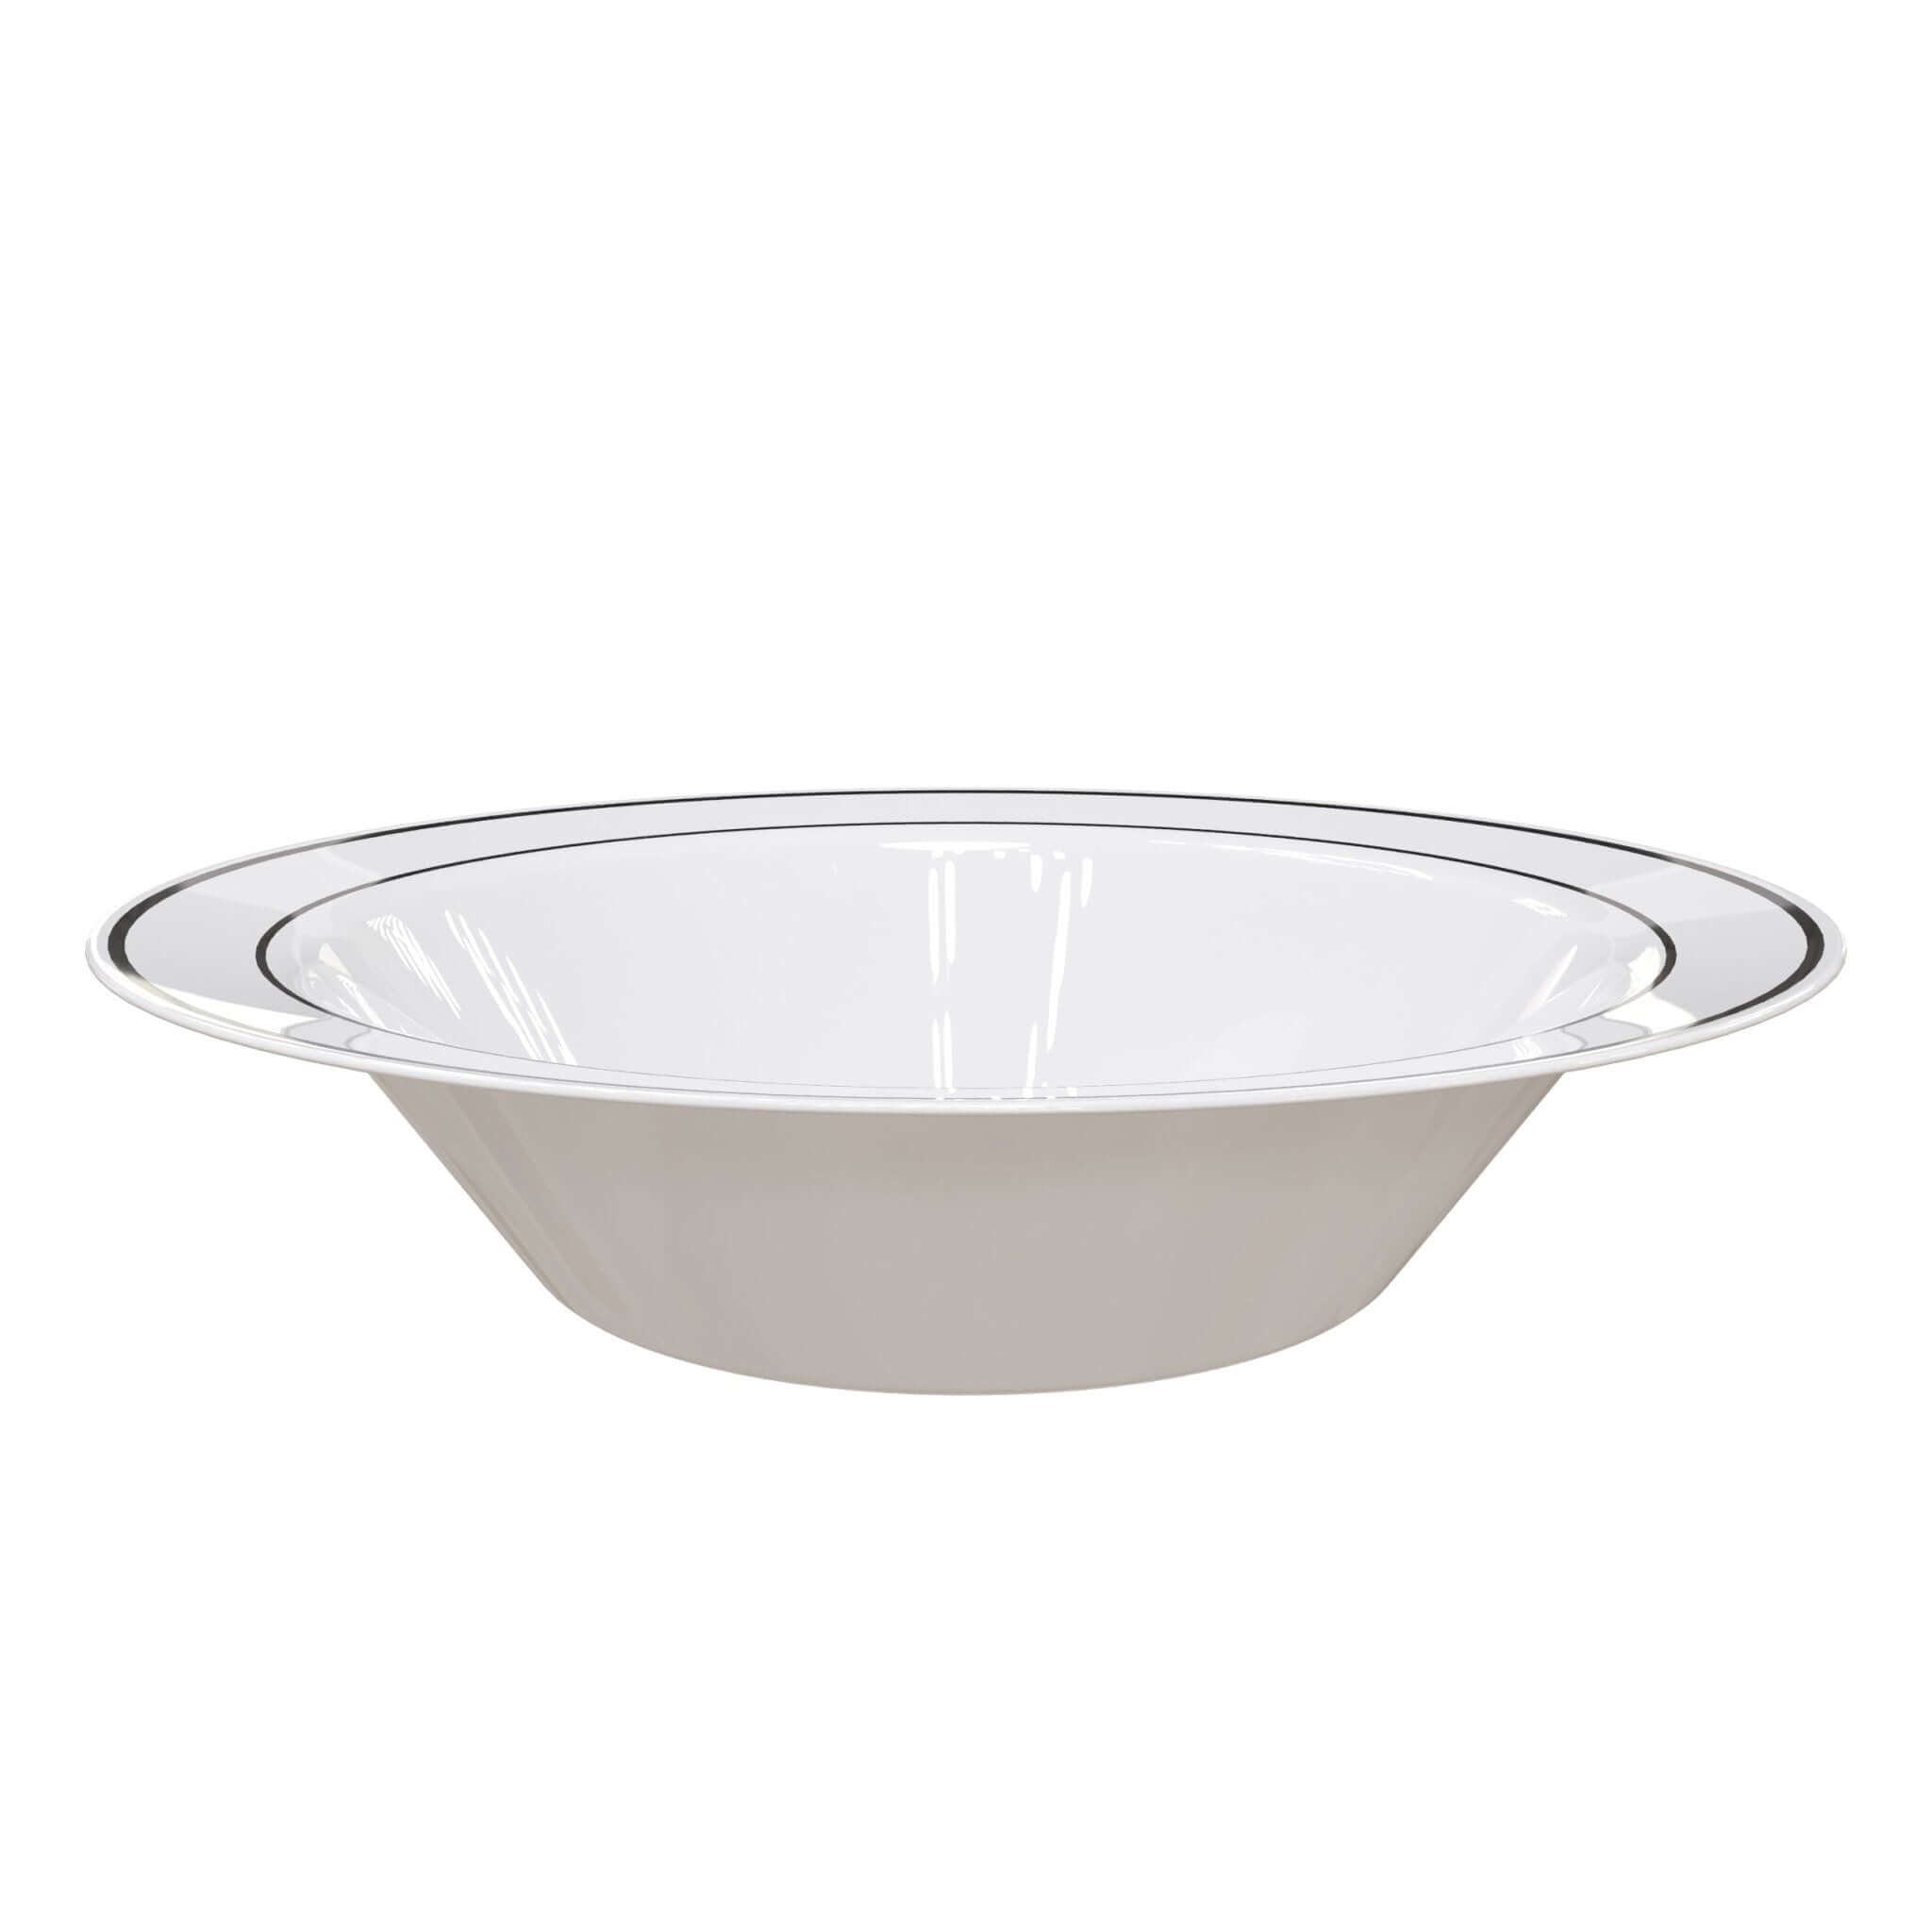 14 oz. White/Silver Line Design Plastic Bowls (120 Count) - Yom Tov Settings